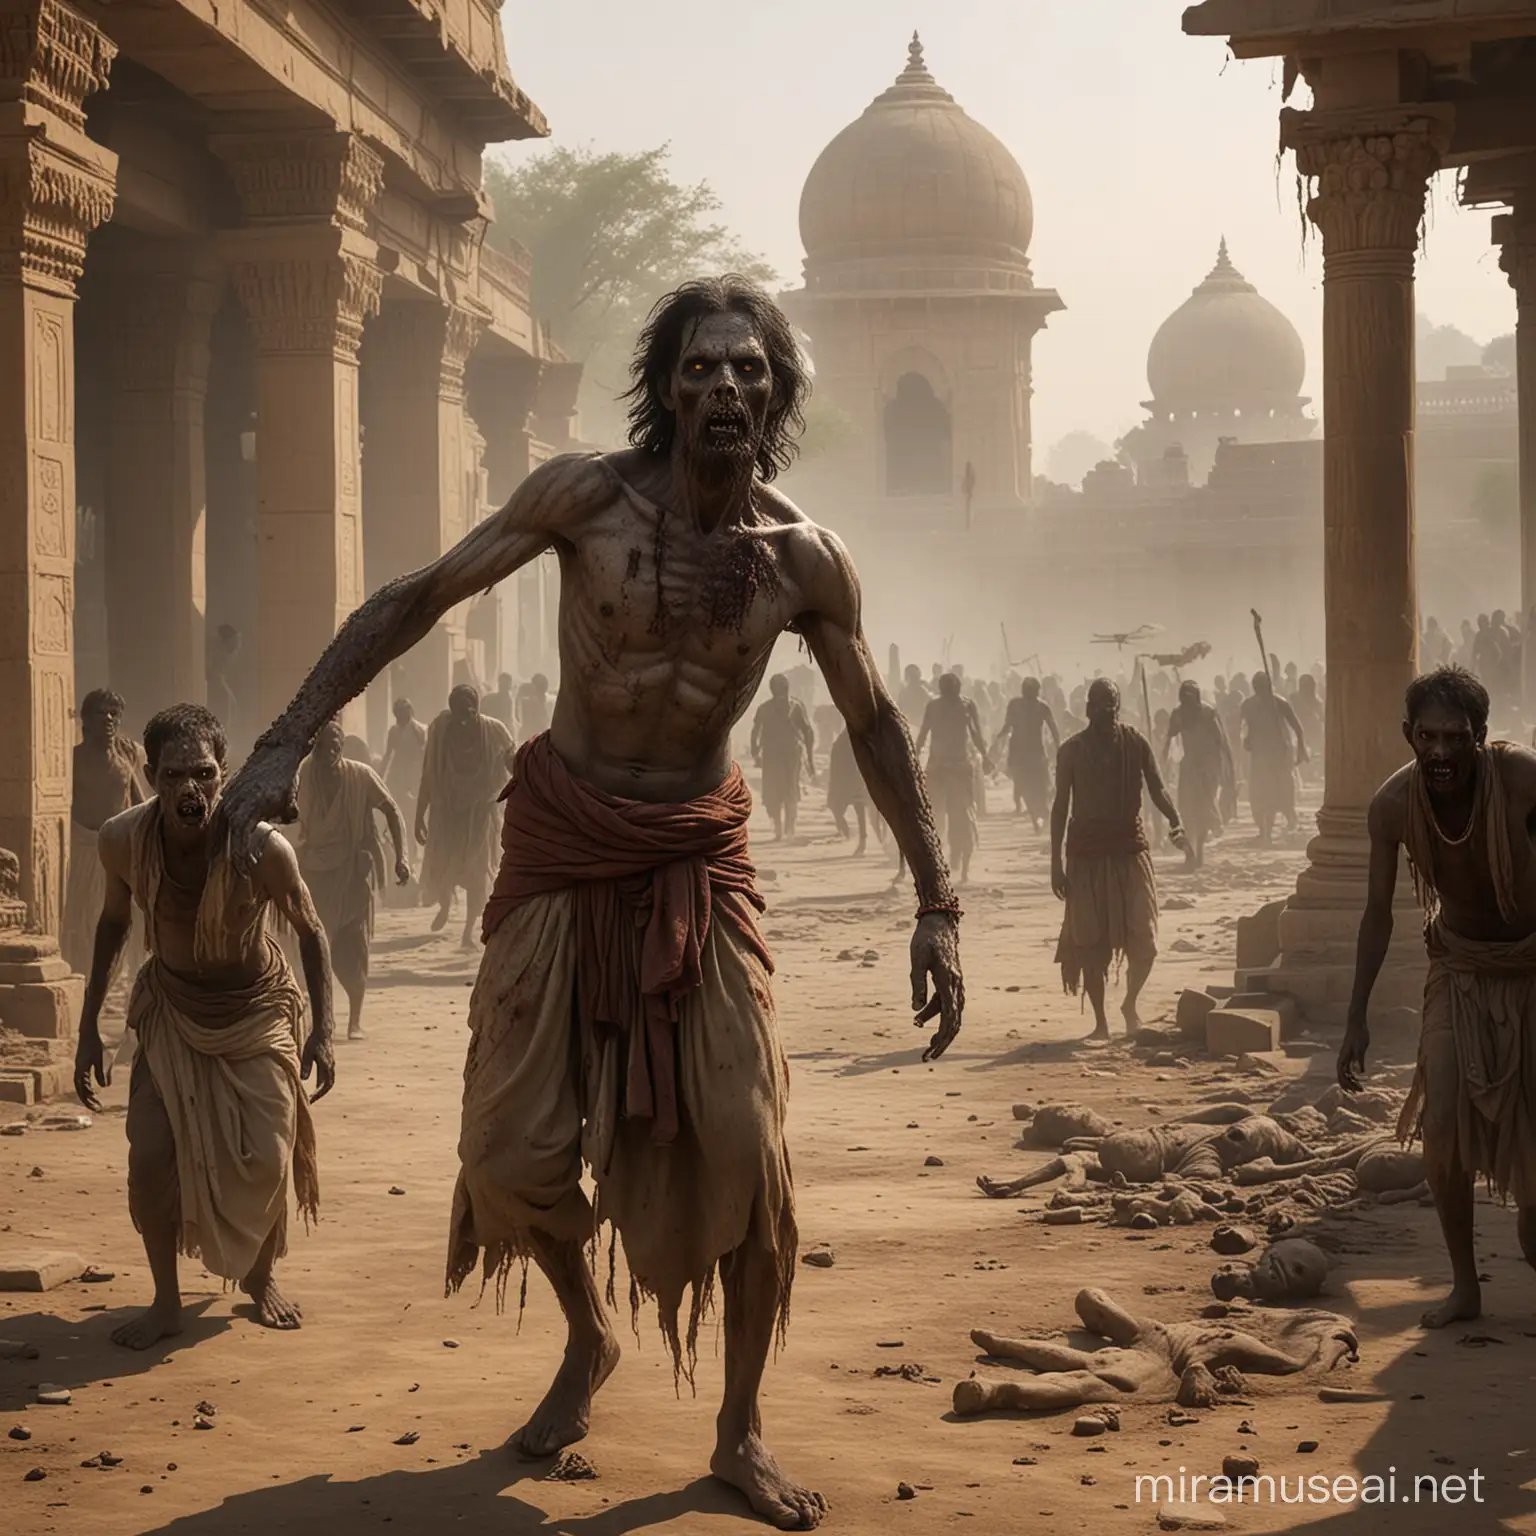 zombies terrorize ancient india
